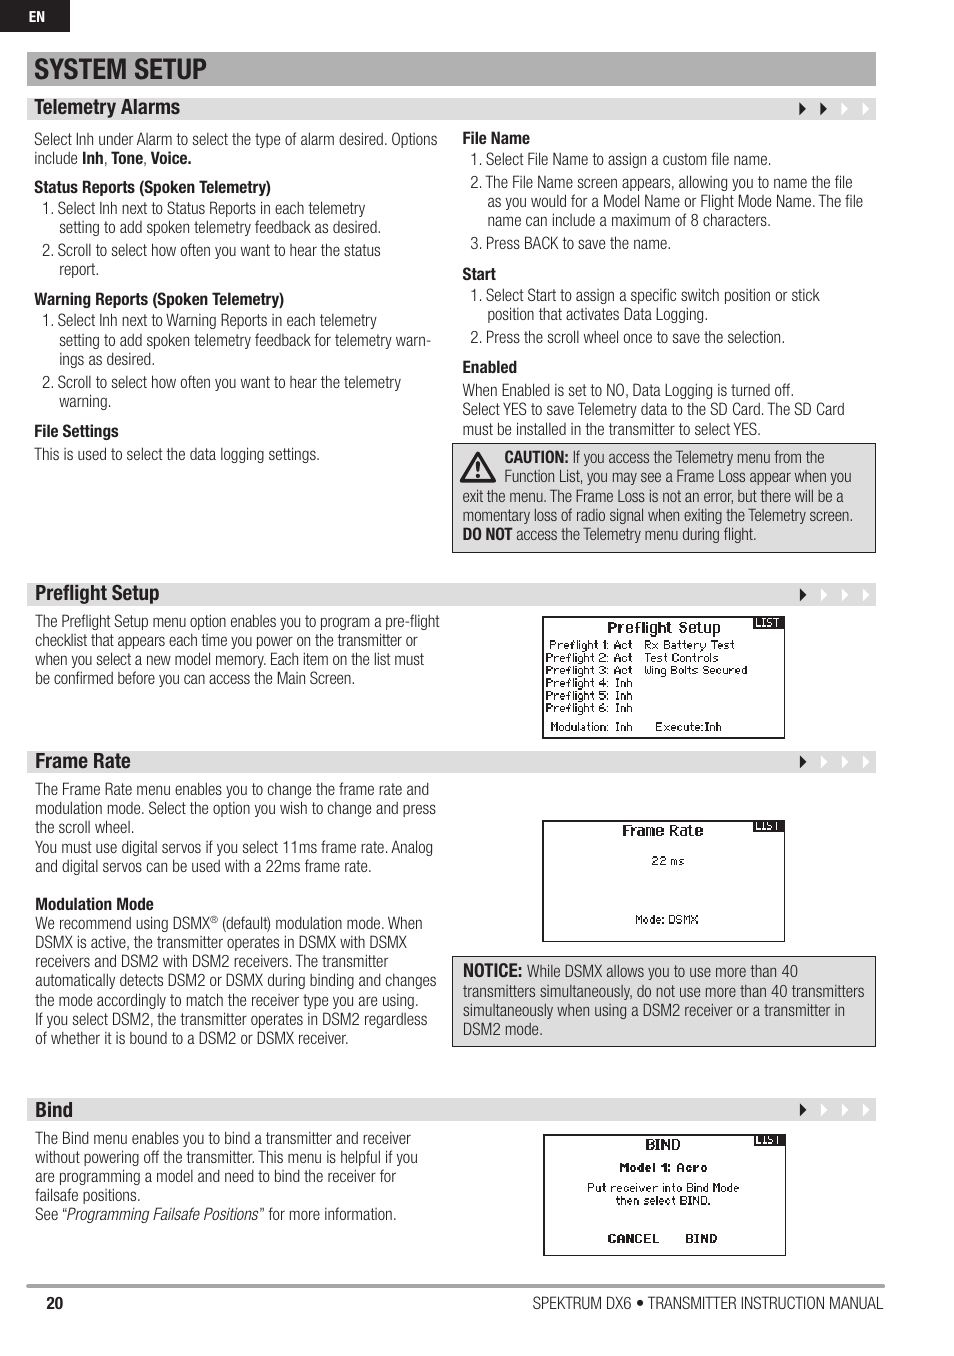 System setup | Spektrum DX6 User Manual | Page 20 / 48 | Original mode